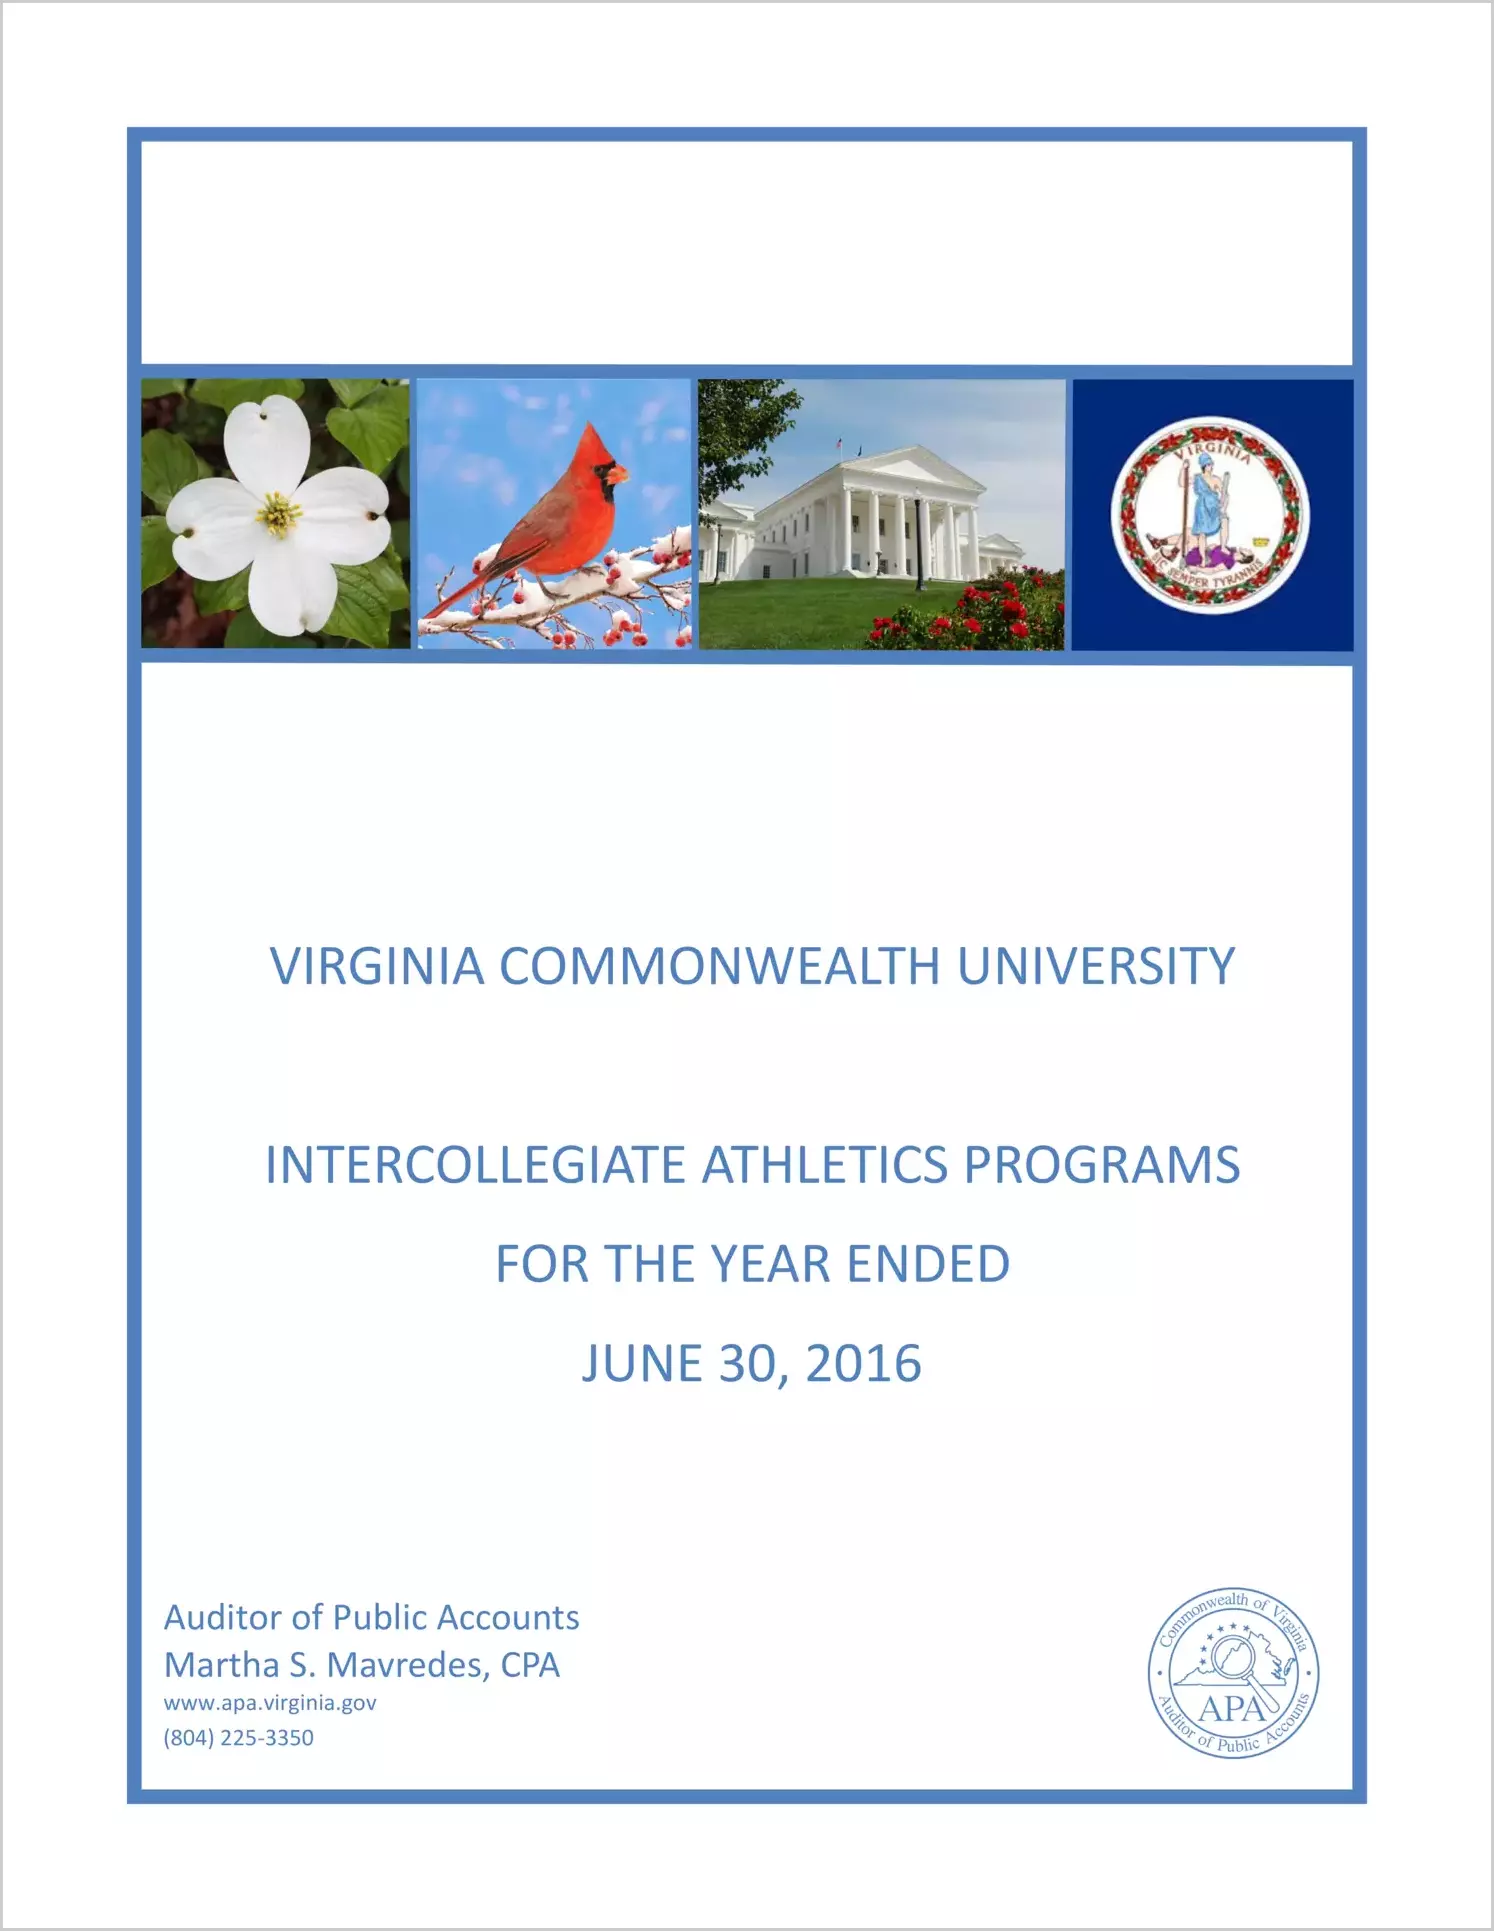 Virginia Commonwealth University Intercollegiate Athletics Programs for the year ended June 30, 2016